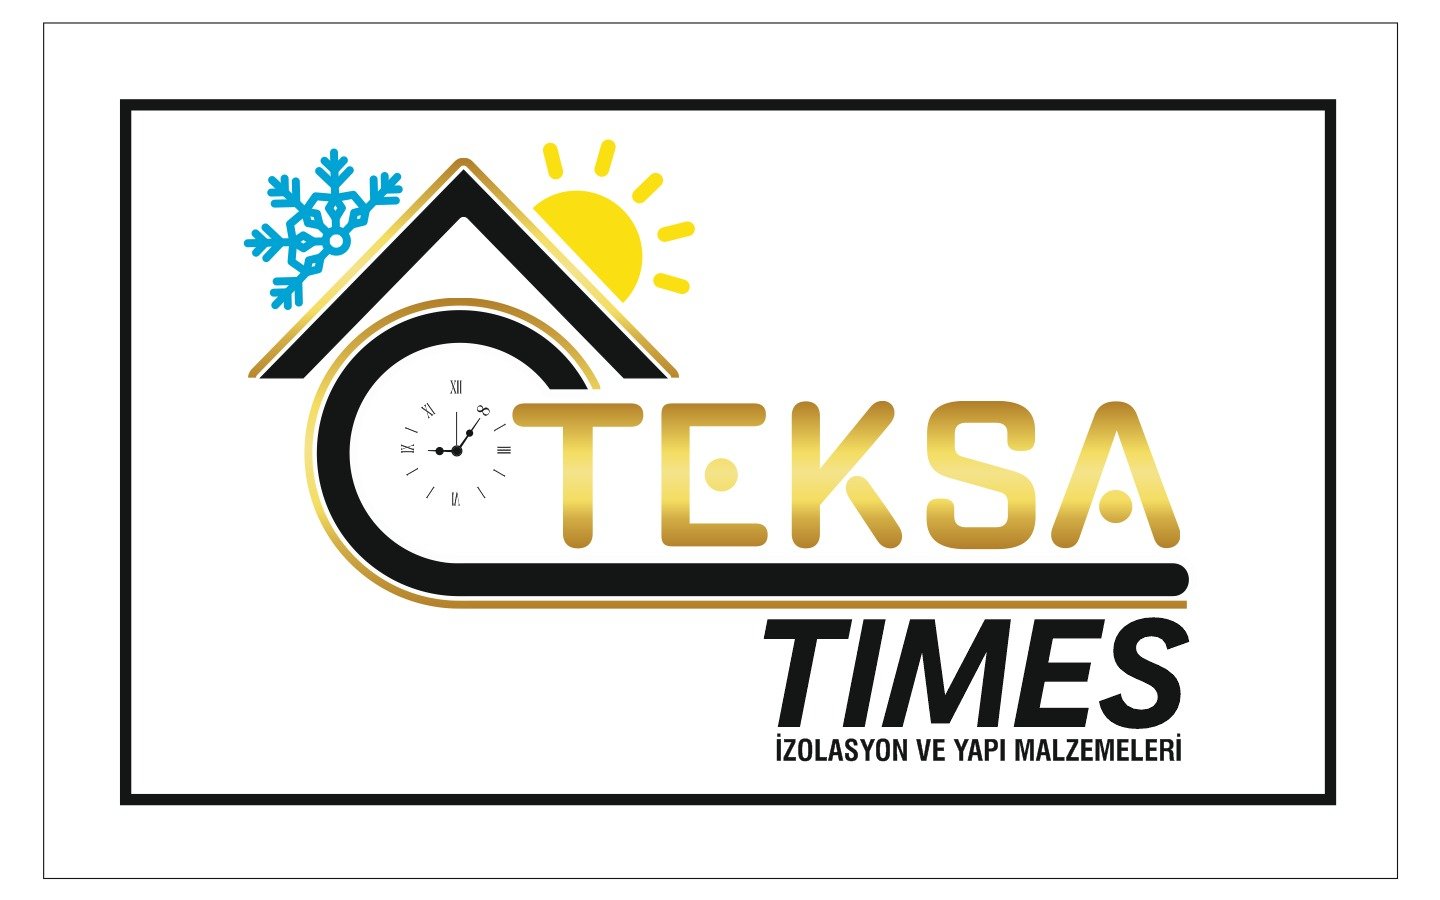 Turgut BEDİR - Teksa Times İzalasyon Yapı Mlzm. Ltd. Şti.